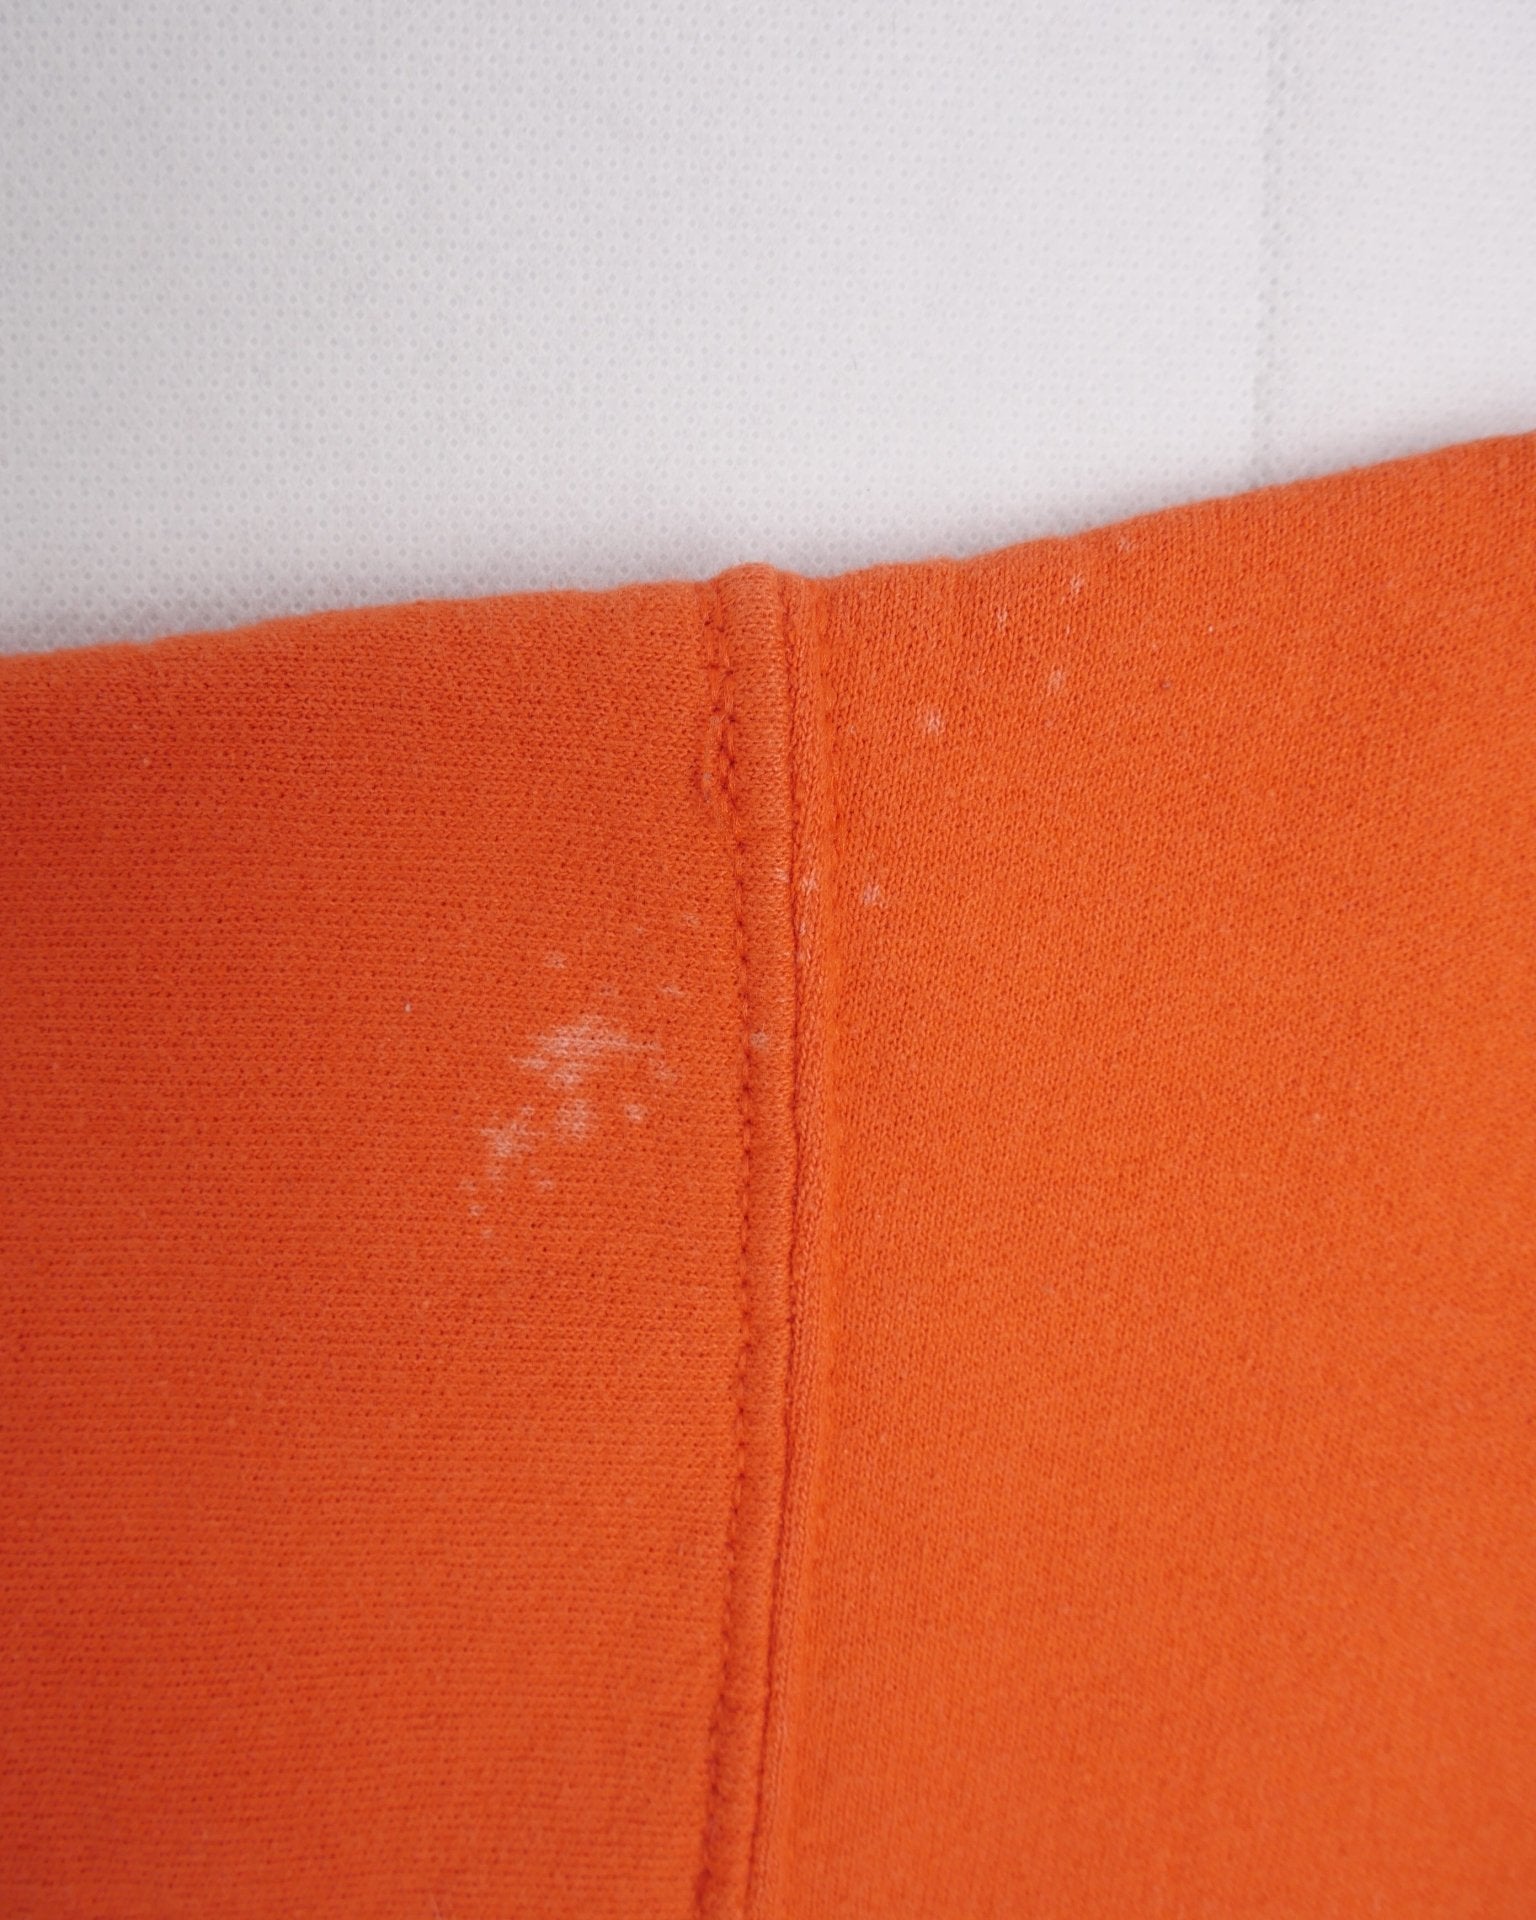 Gildan printed 'Thunderbirds' orange Hoodie - Peeces